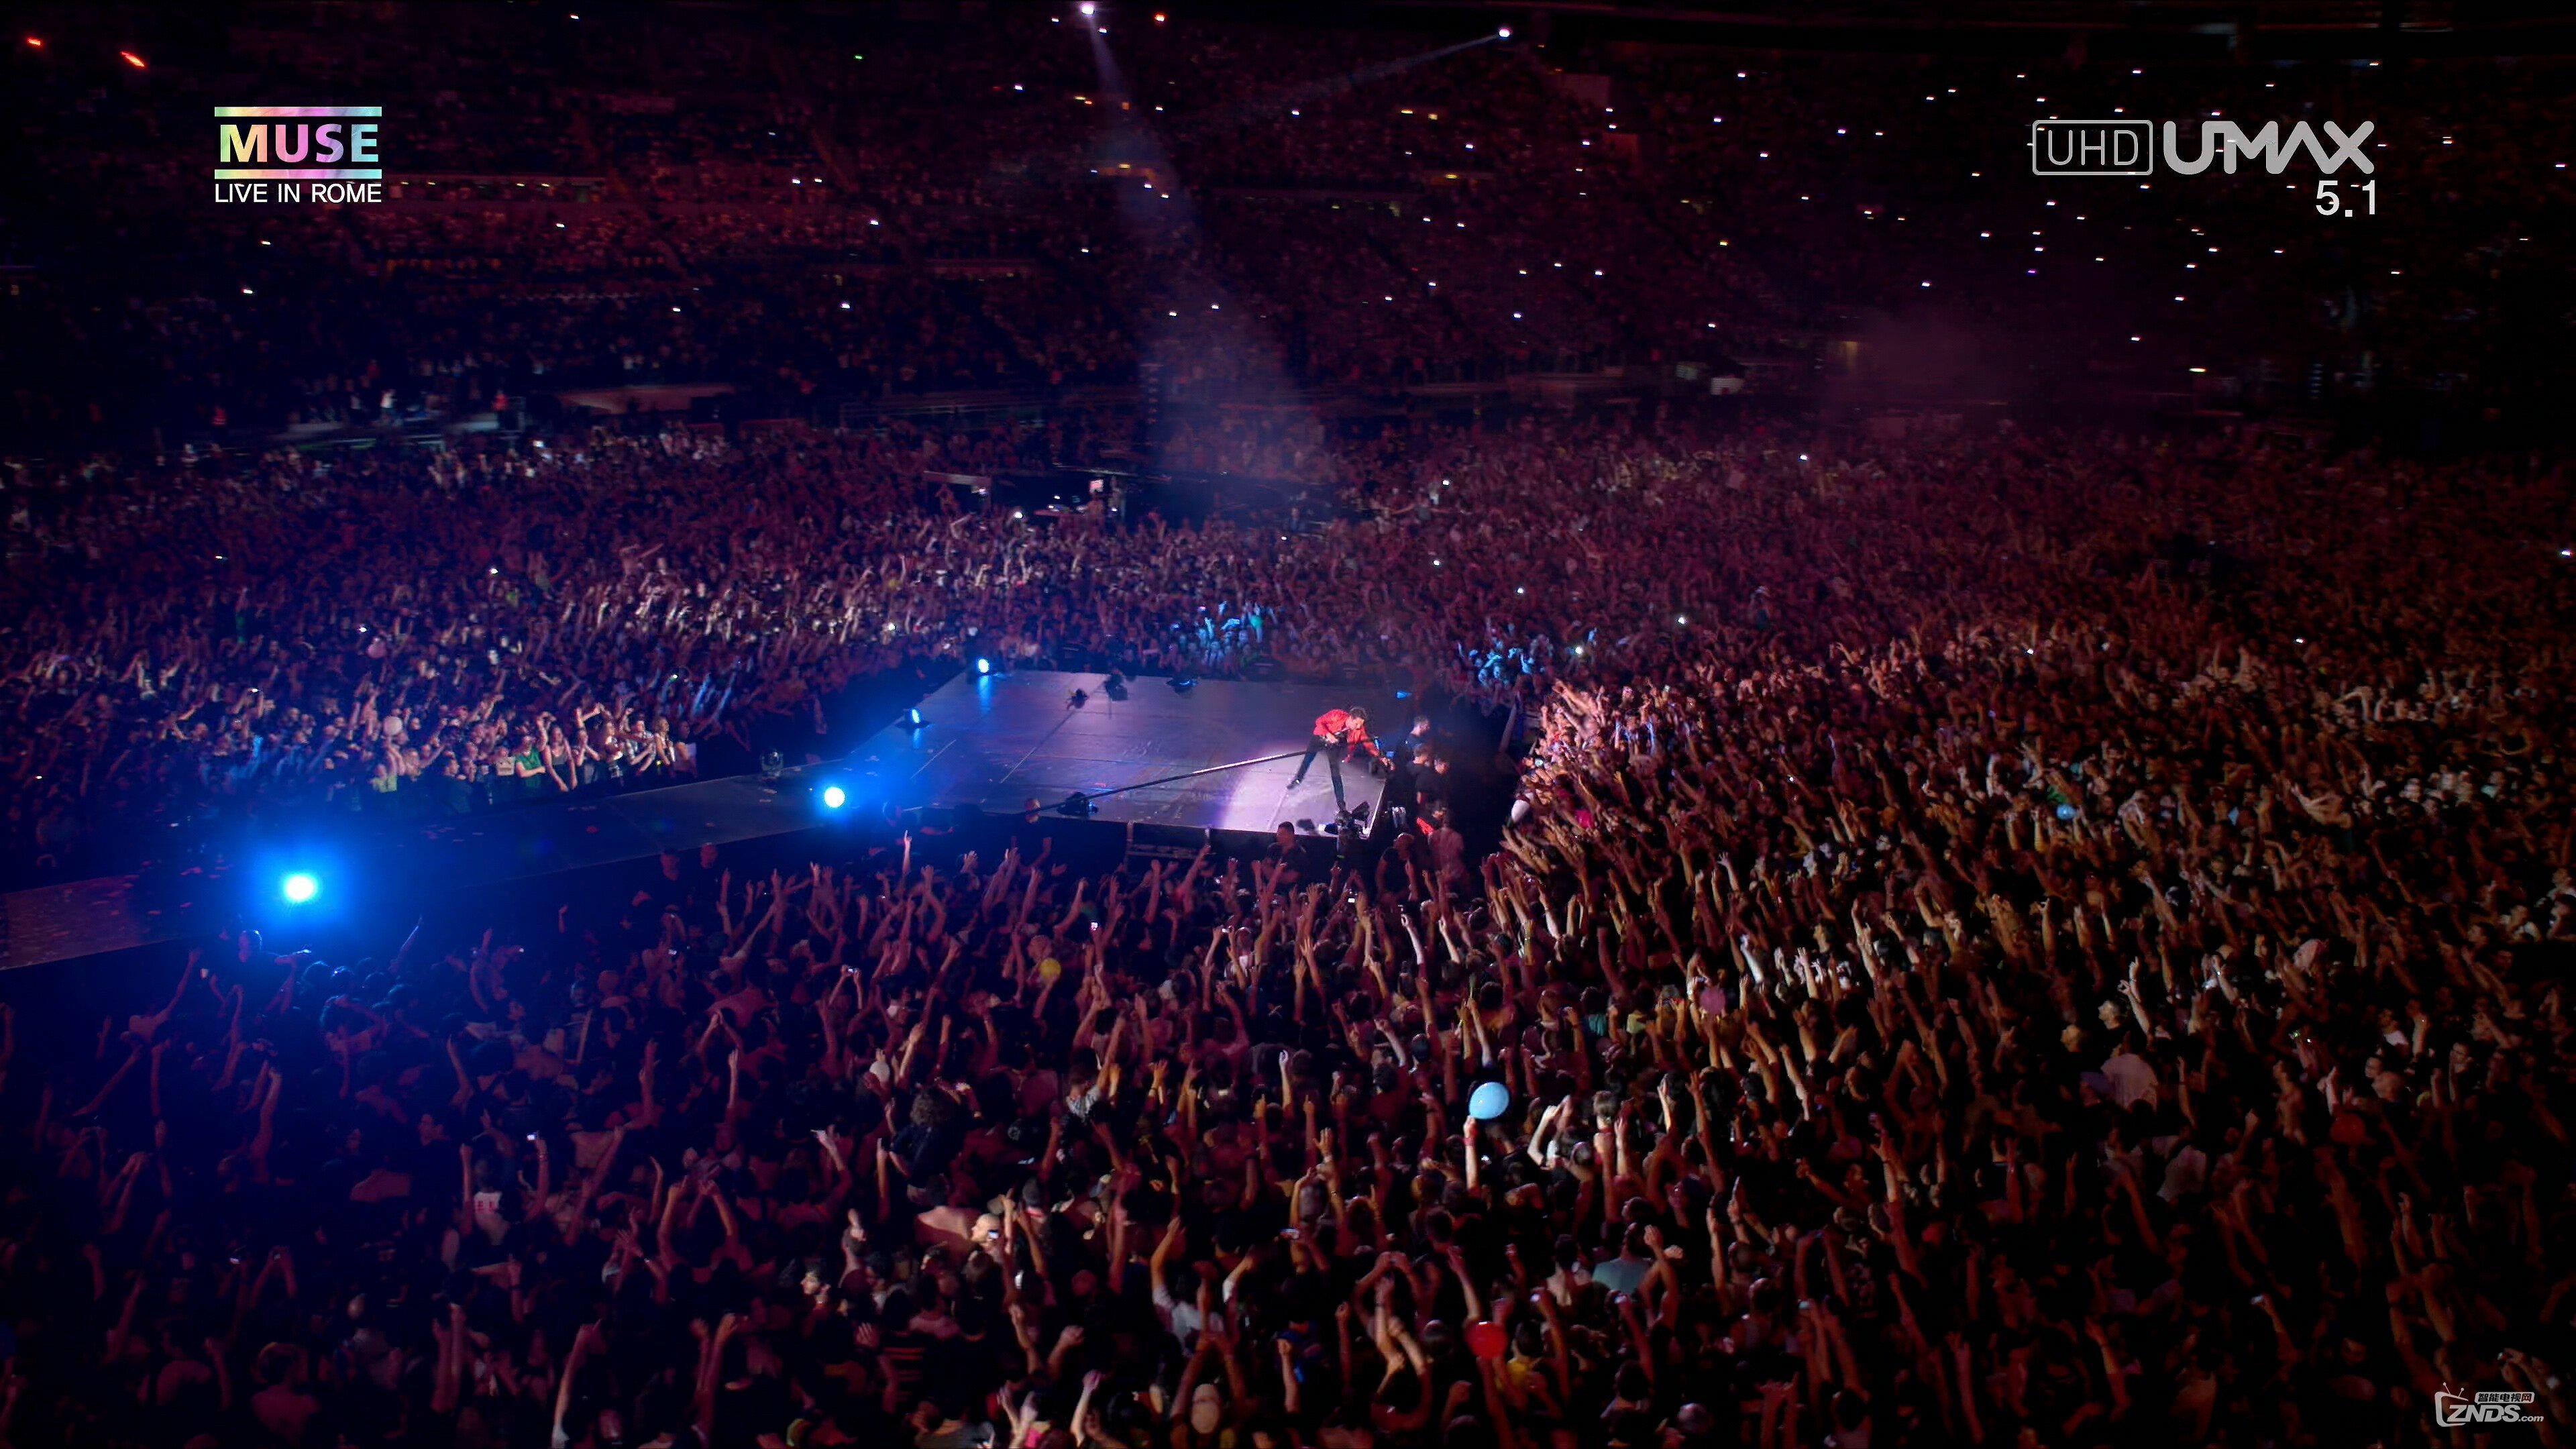 Muse.Live.At.Rome.Olympic.Stadium.2013.2160p.UHDTV.HEVC.mkv_20160313_001830.015.jpg